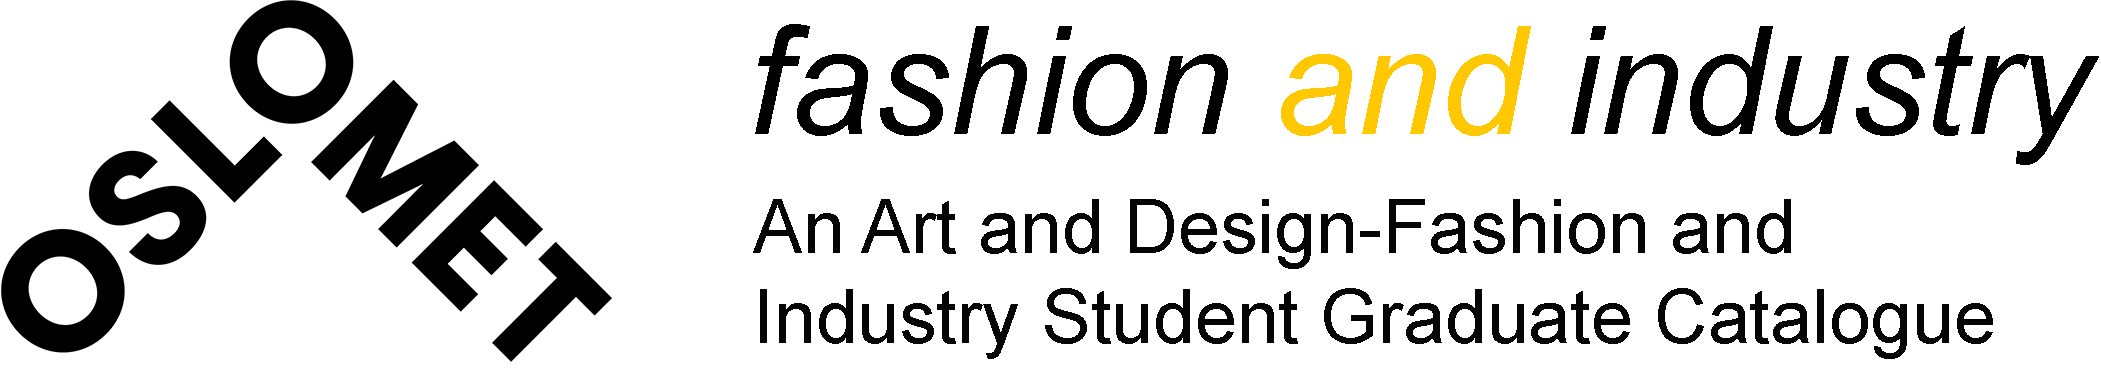 OsloMet logo og tittelen Fashion and Industry.